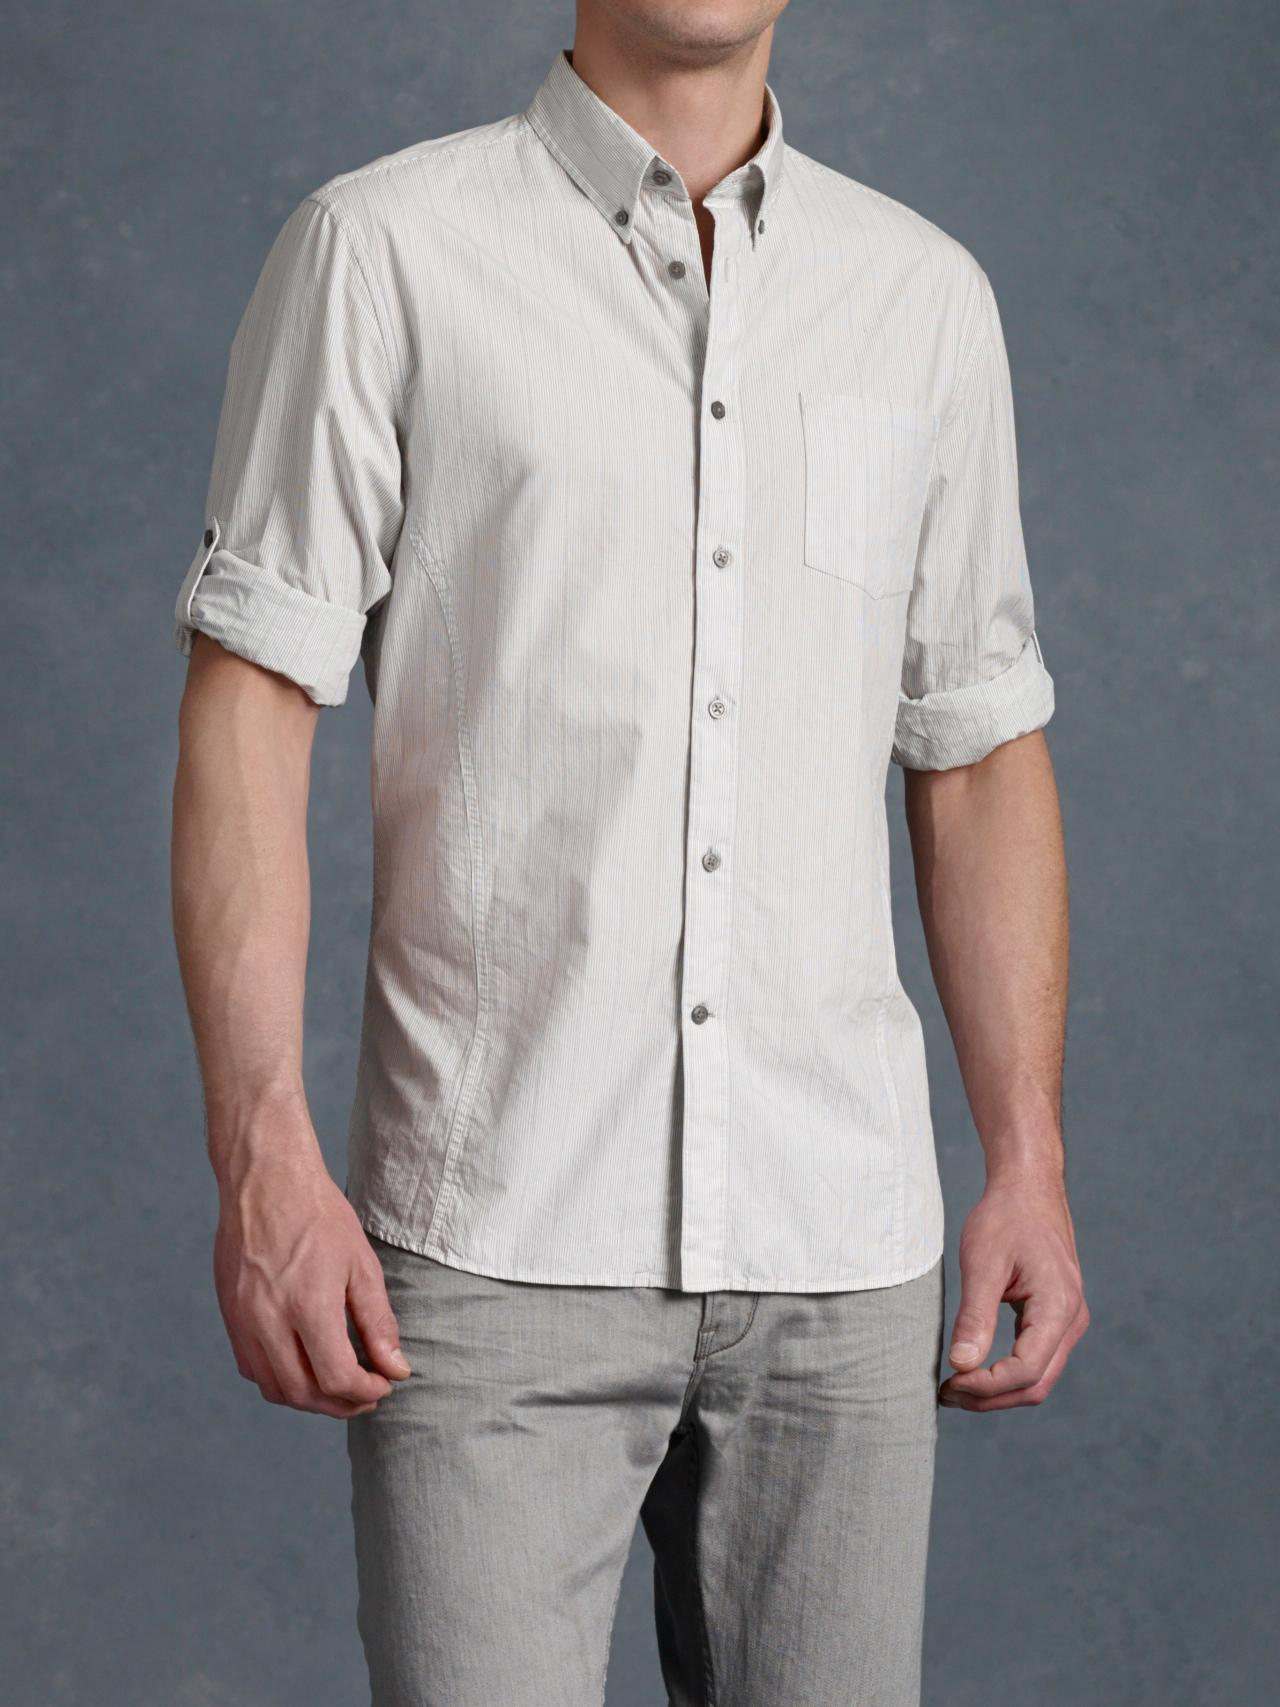 Lyst - John Varvatos Roll Up Sleeve Shirt in Gray for Men